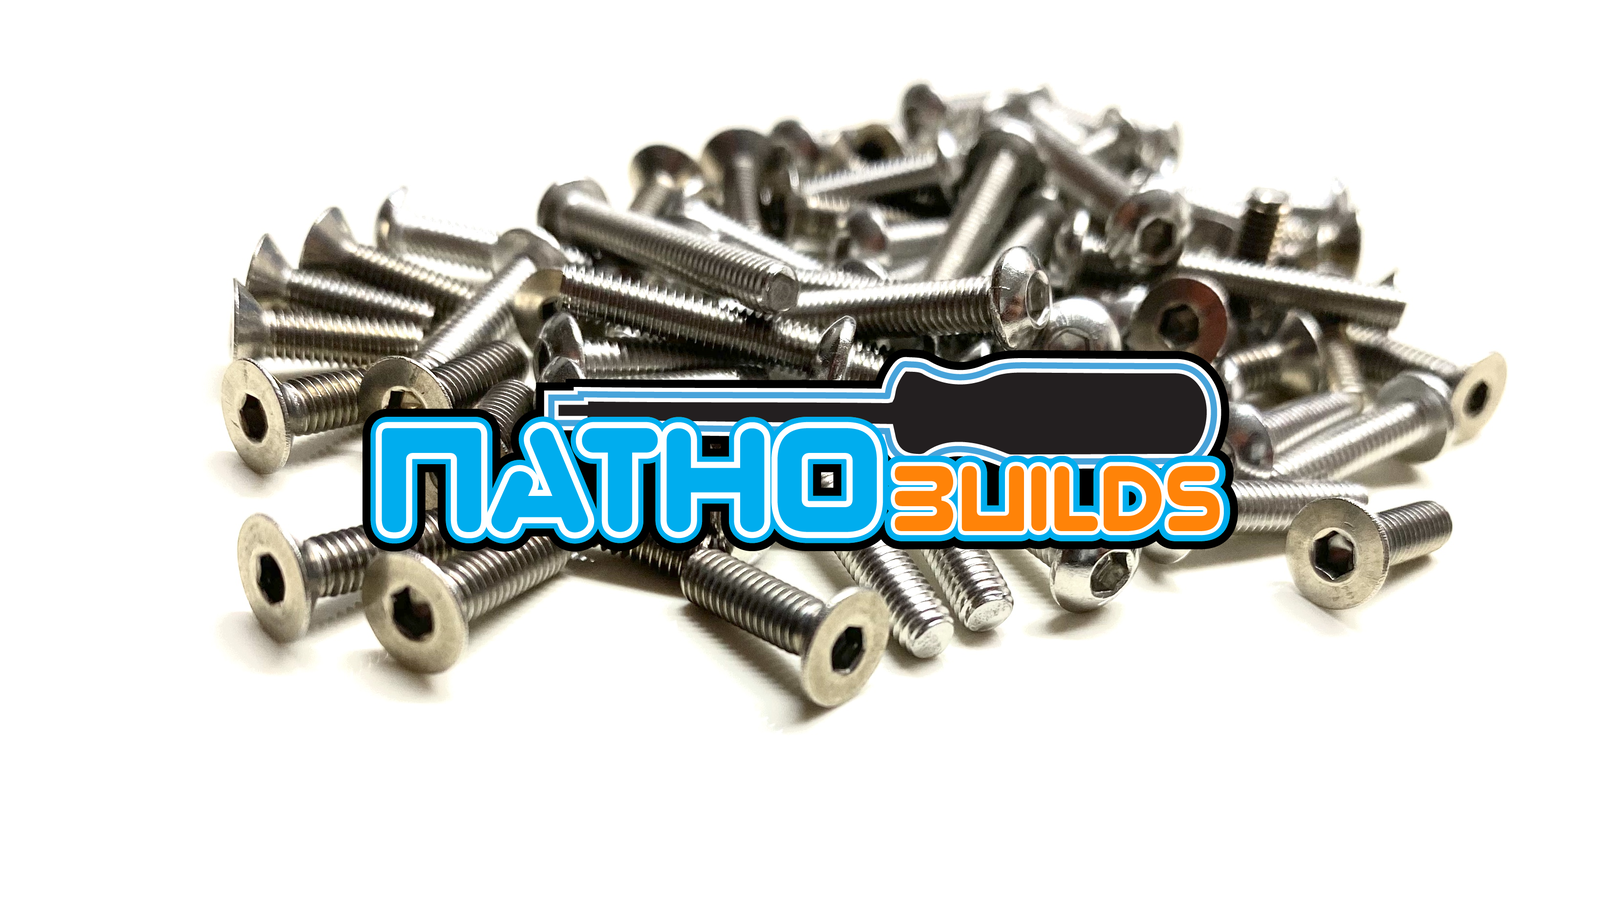 NathoBuilds: Stainless Steel Screw Kits for 1/8th - Team Associated RC8B3.2e